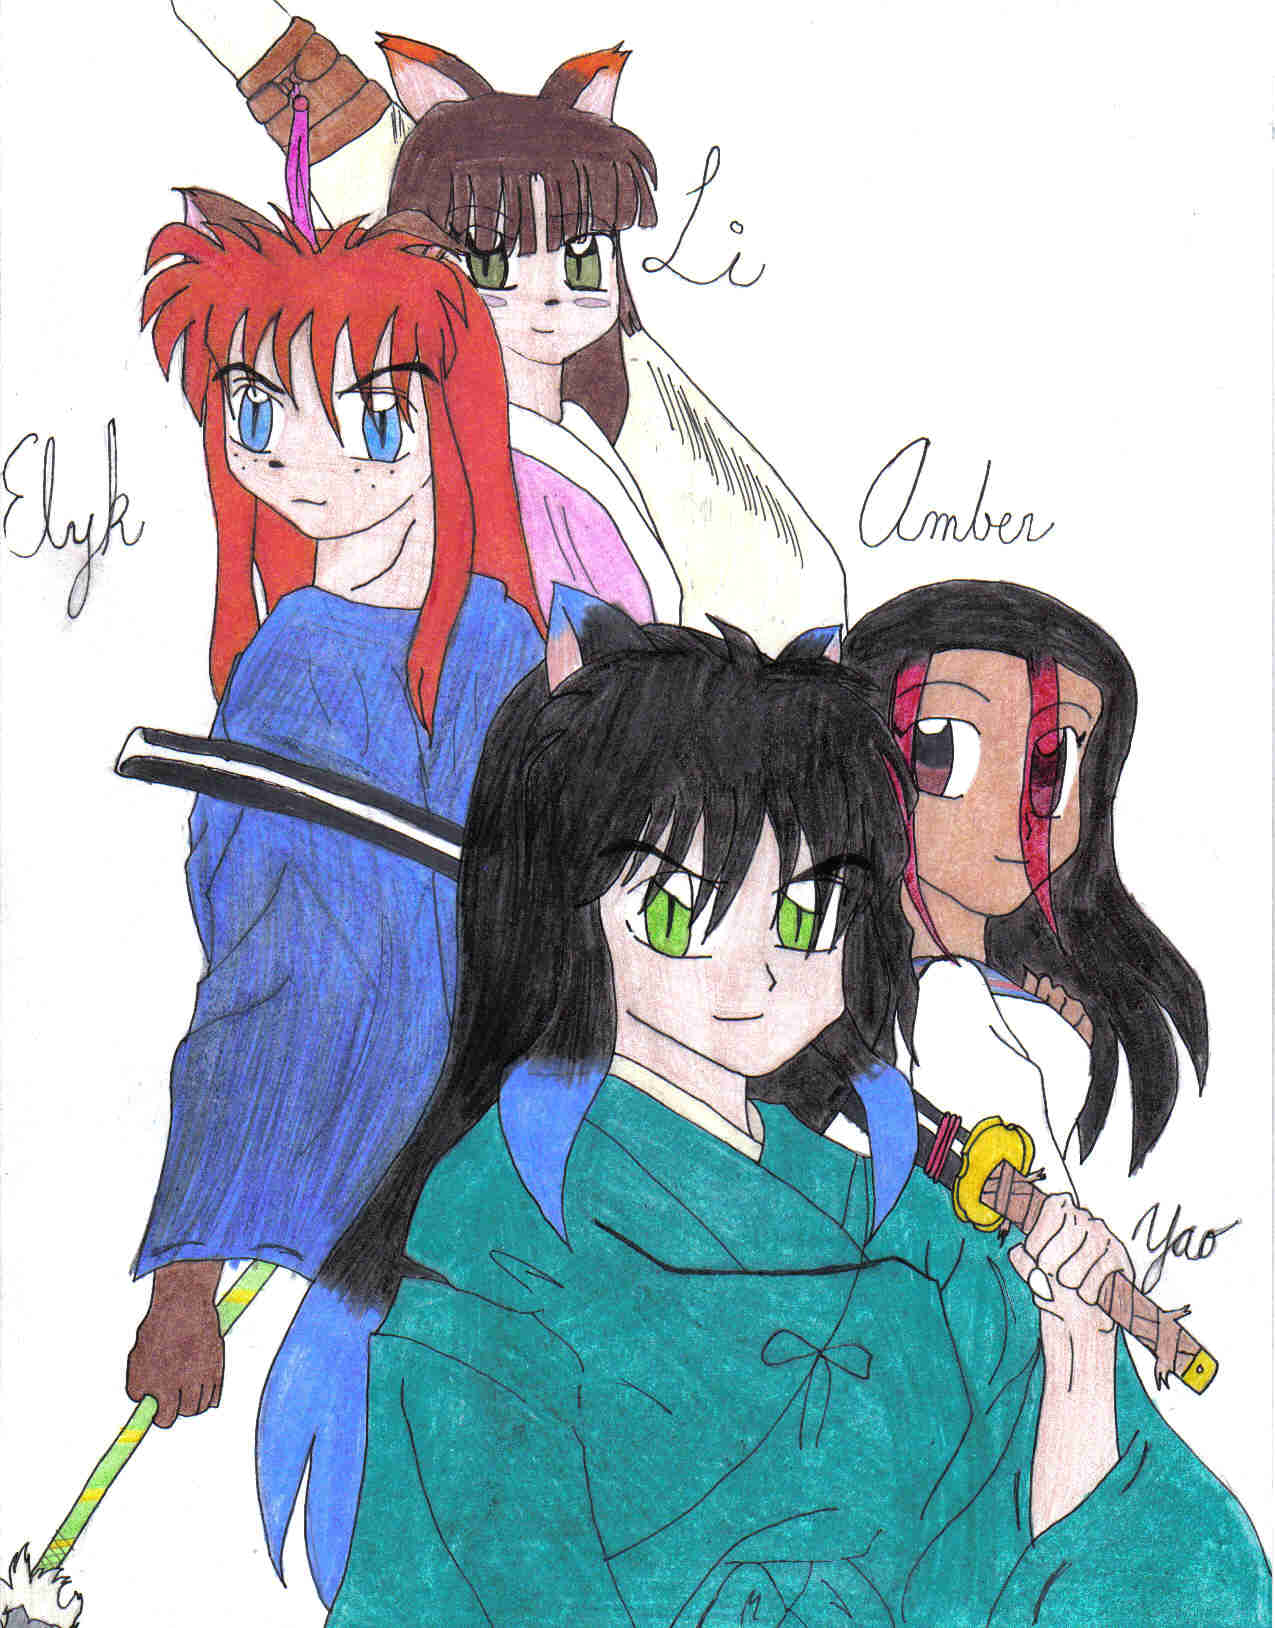 Li, Amber, Elyk, and Yao by iamkagome93